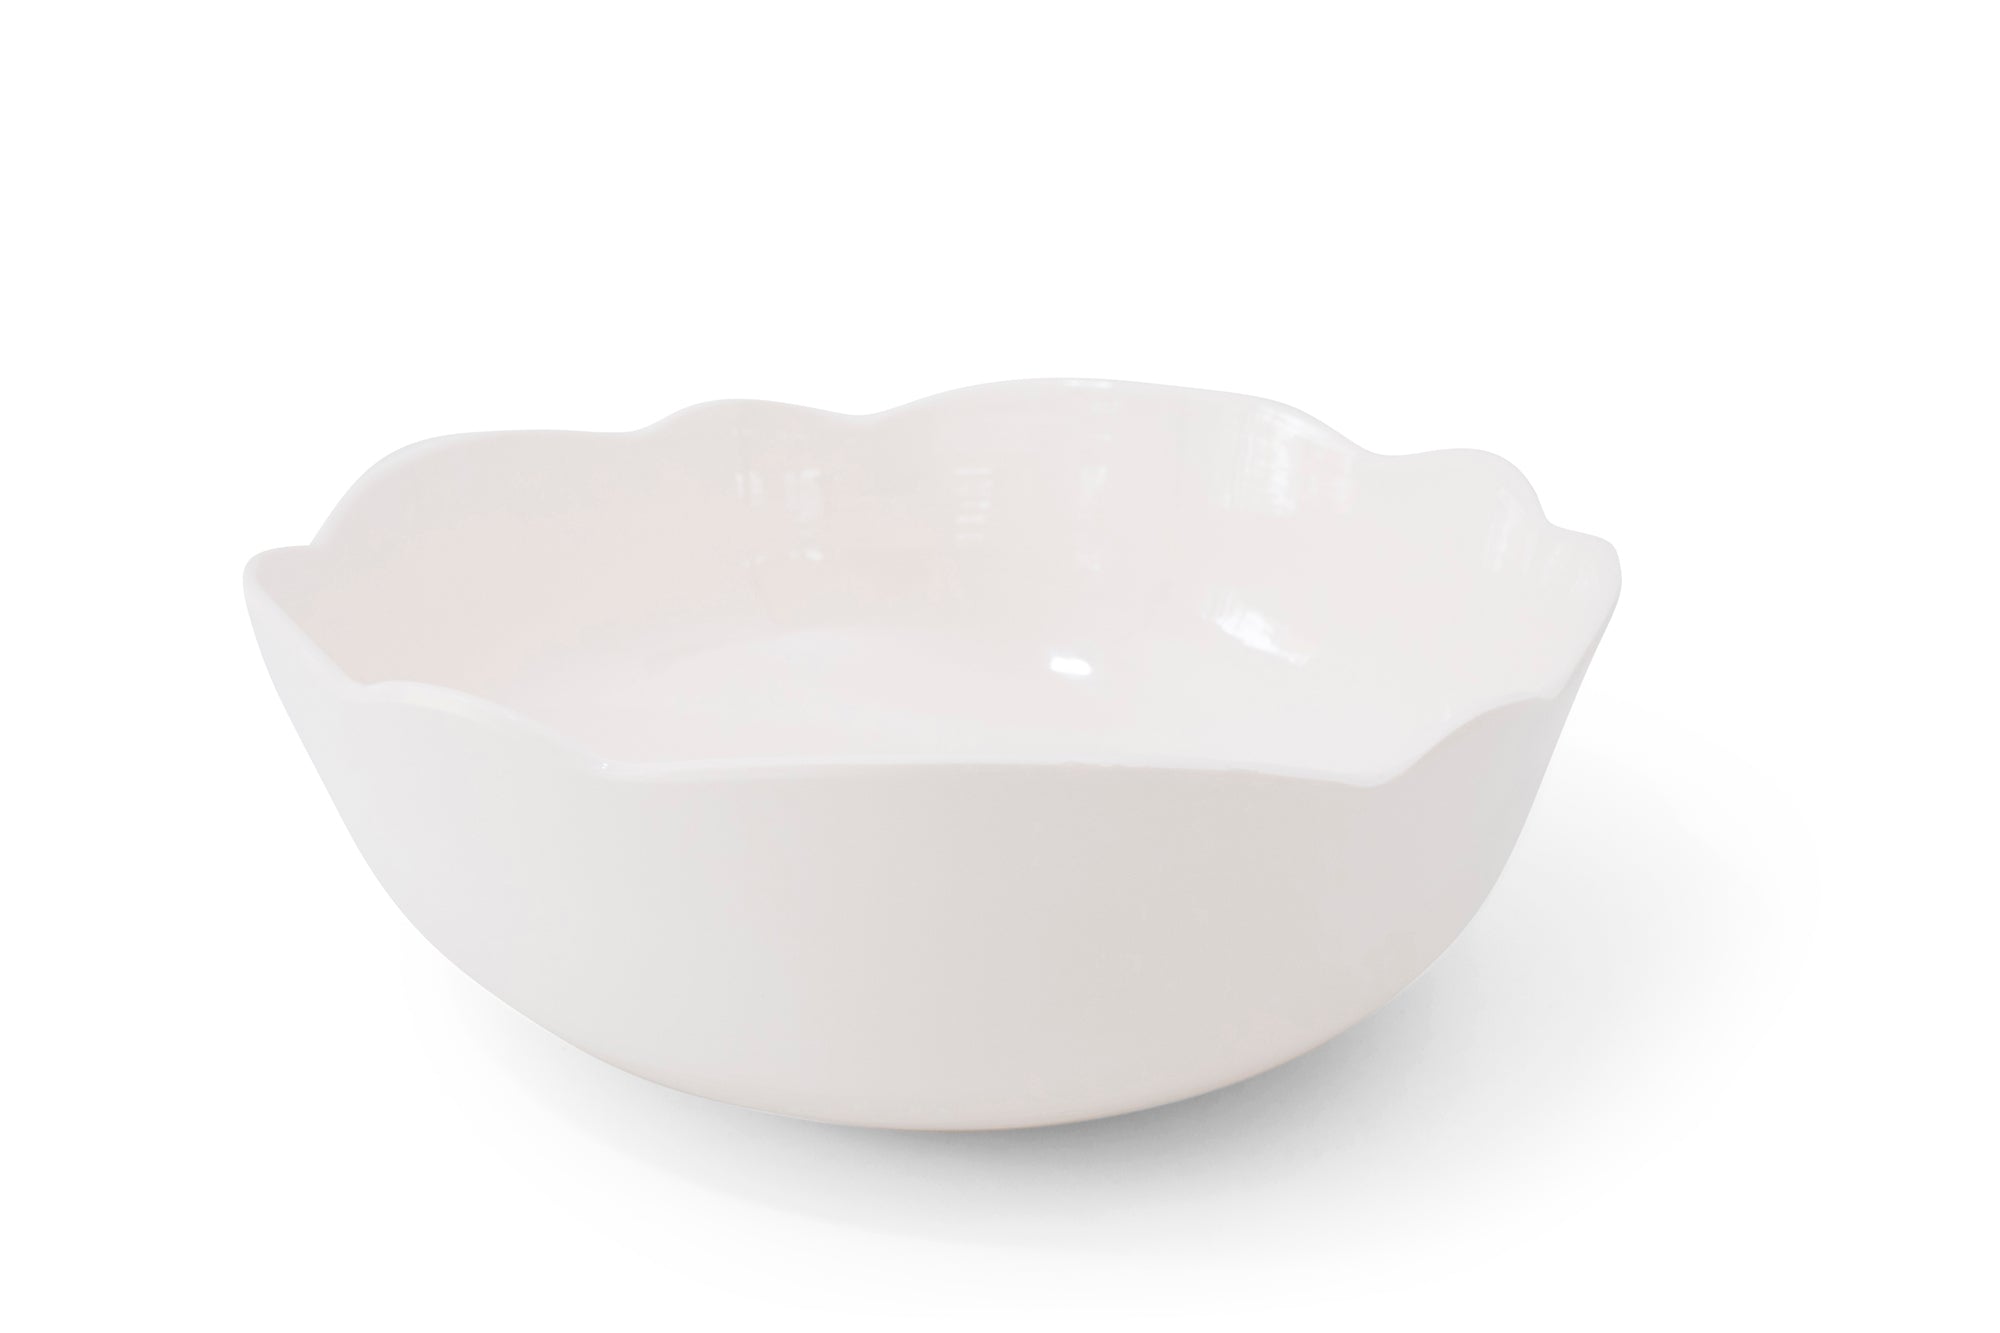 Wayfair, Porcelain Mixing Bowls, Up to 40% Off Until 11/20